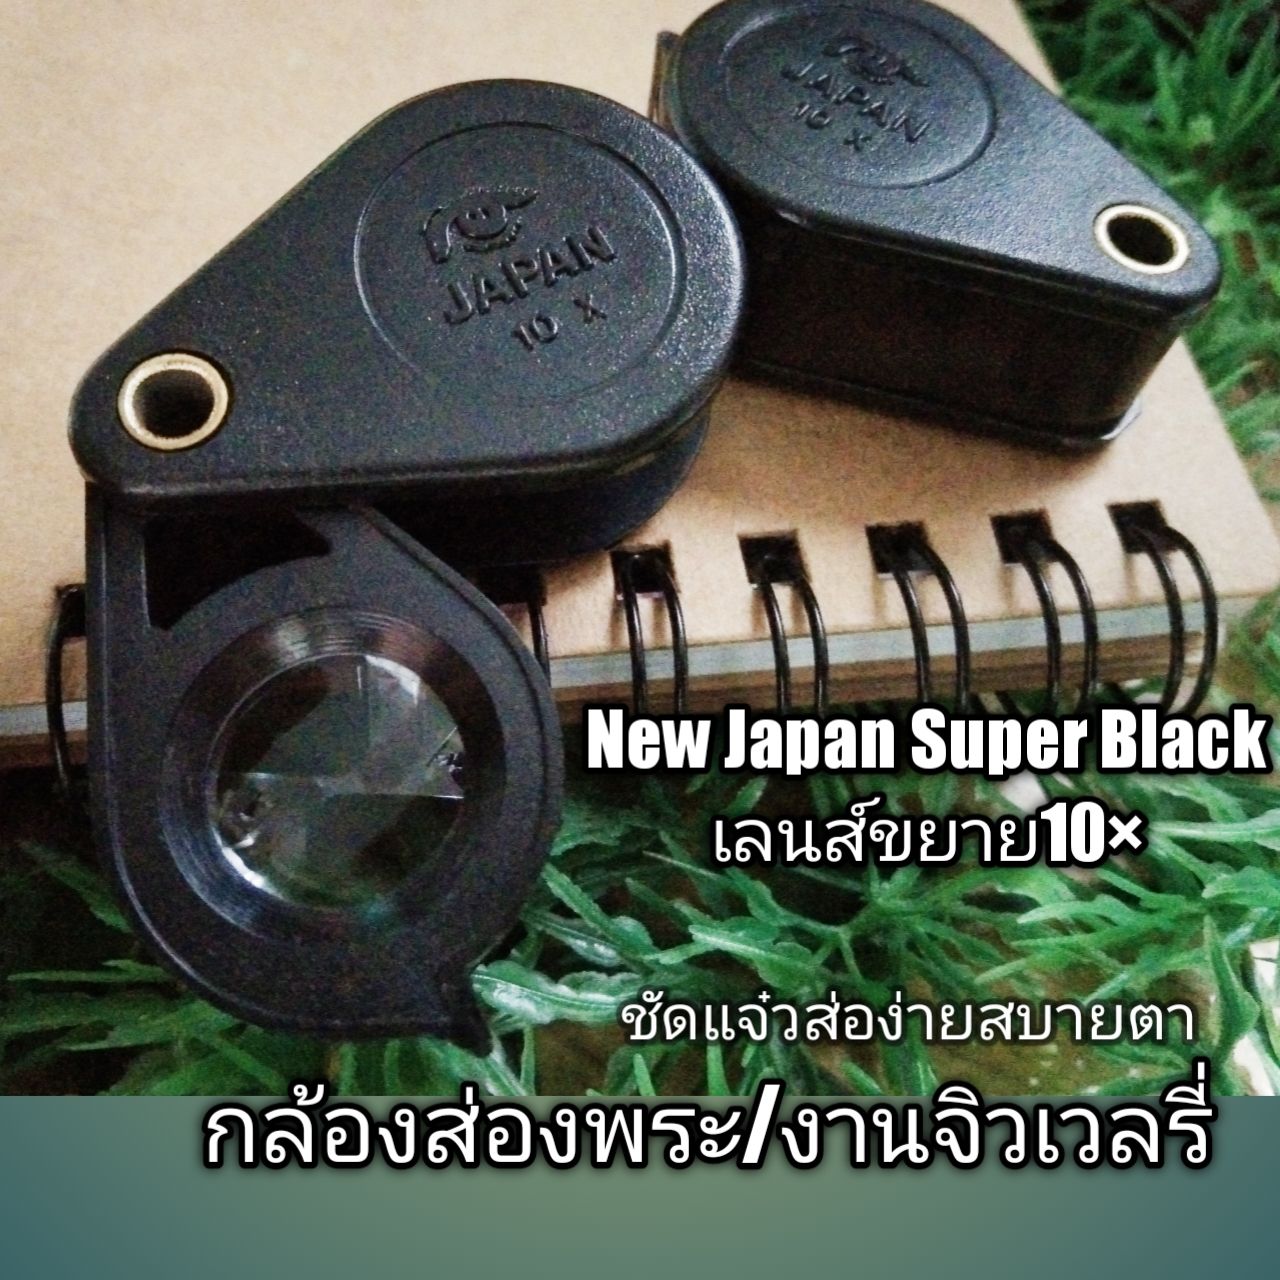 🔥 New Super Black Japan กล้องส่องพระ/งานจิวเวลรี่ สีดำสวย เลนส์ขยาย 10× เลนดีชัดแจ๋ว ส่องง่ายสบายตา